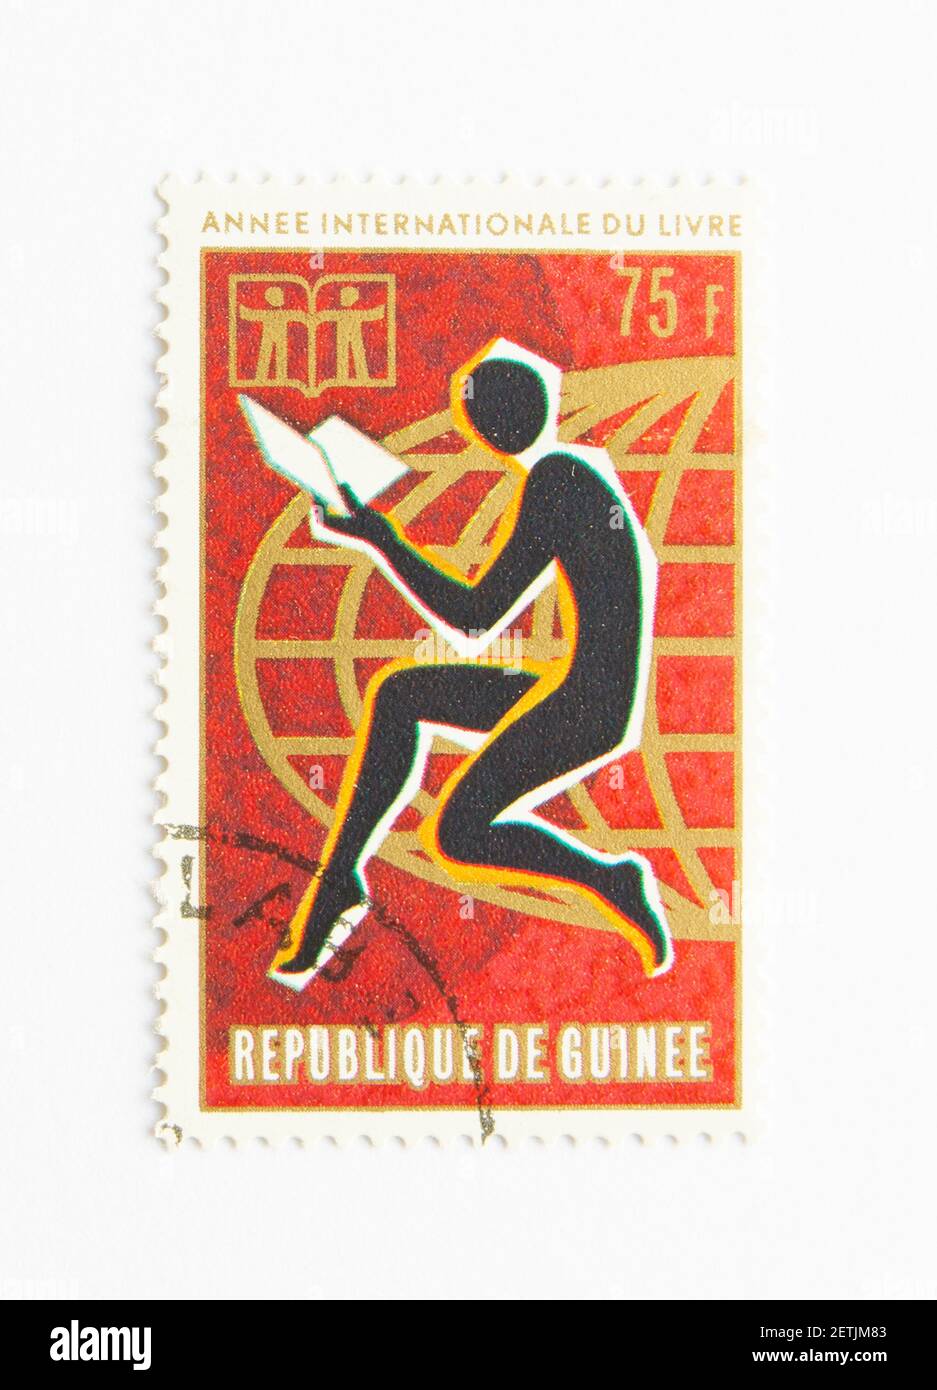 01.03.2021 Istanbul Turkey. Guinea Republic Postage Stamp. circa 1972. international year of the book. man reading book Stock Photo